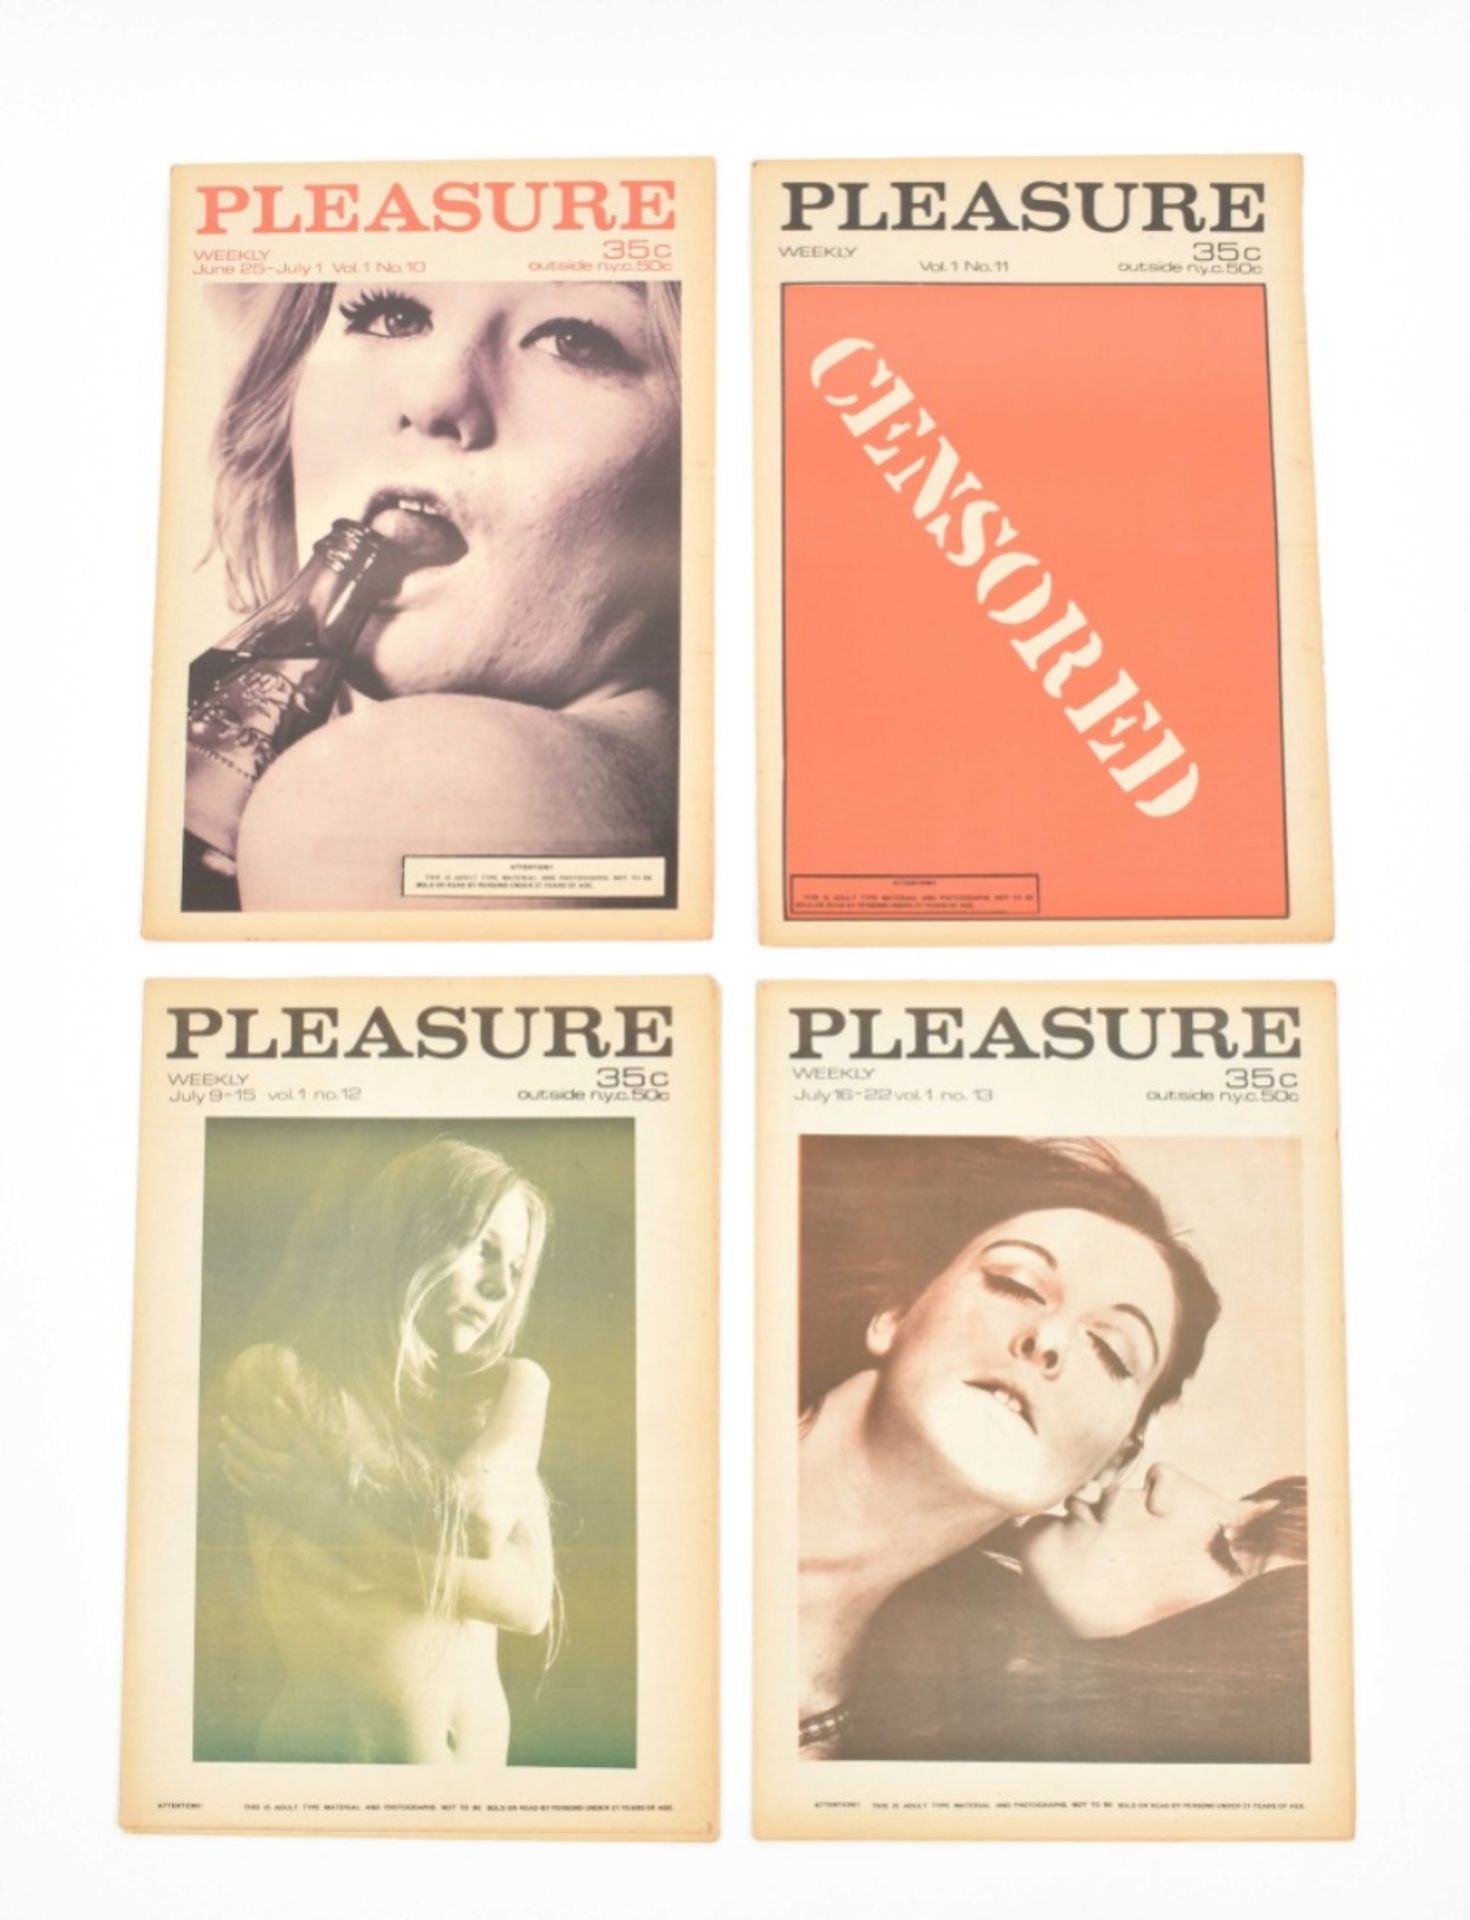 [Subculture] Pleasure - Image 7 of 8